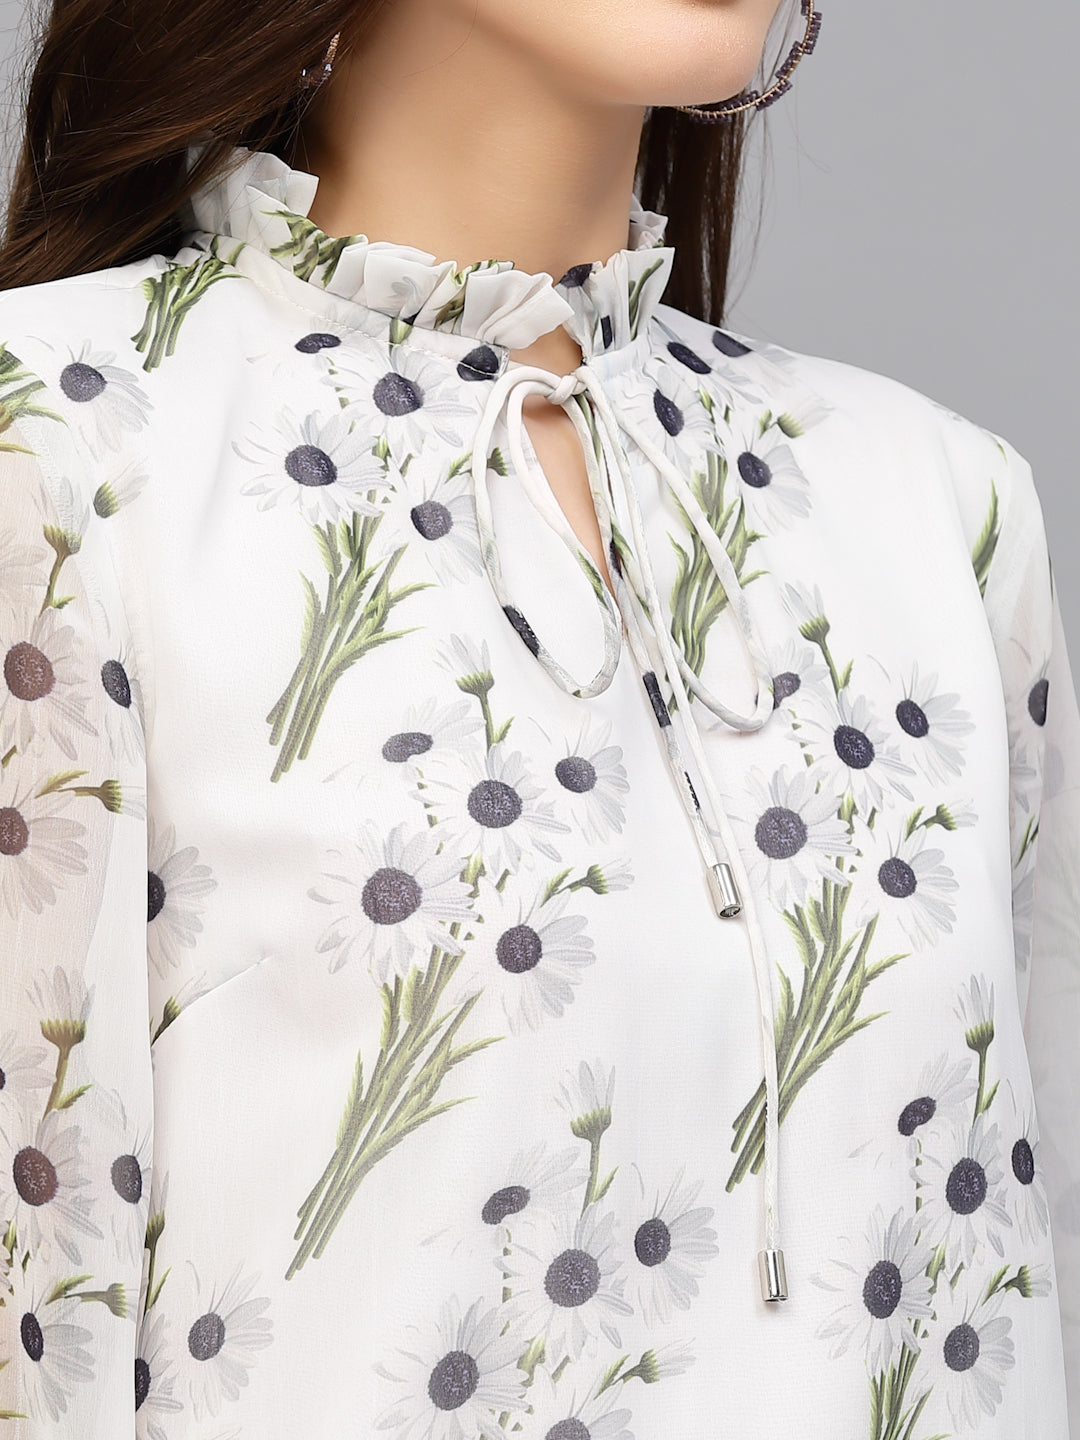 Valbone Women’s White Georgette Floral Printed Dress Tie Pattern Neck